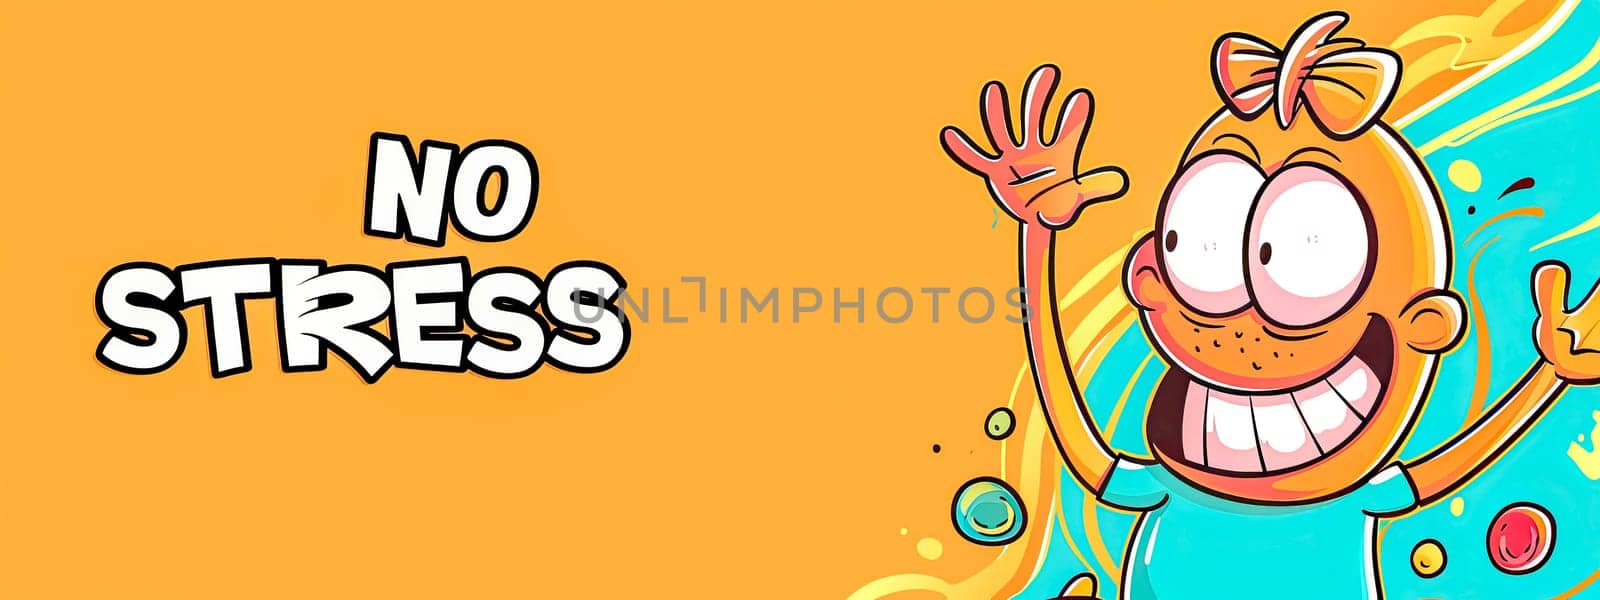 Cheerful cartoon character gesturing no stress by Edophoto